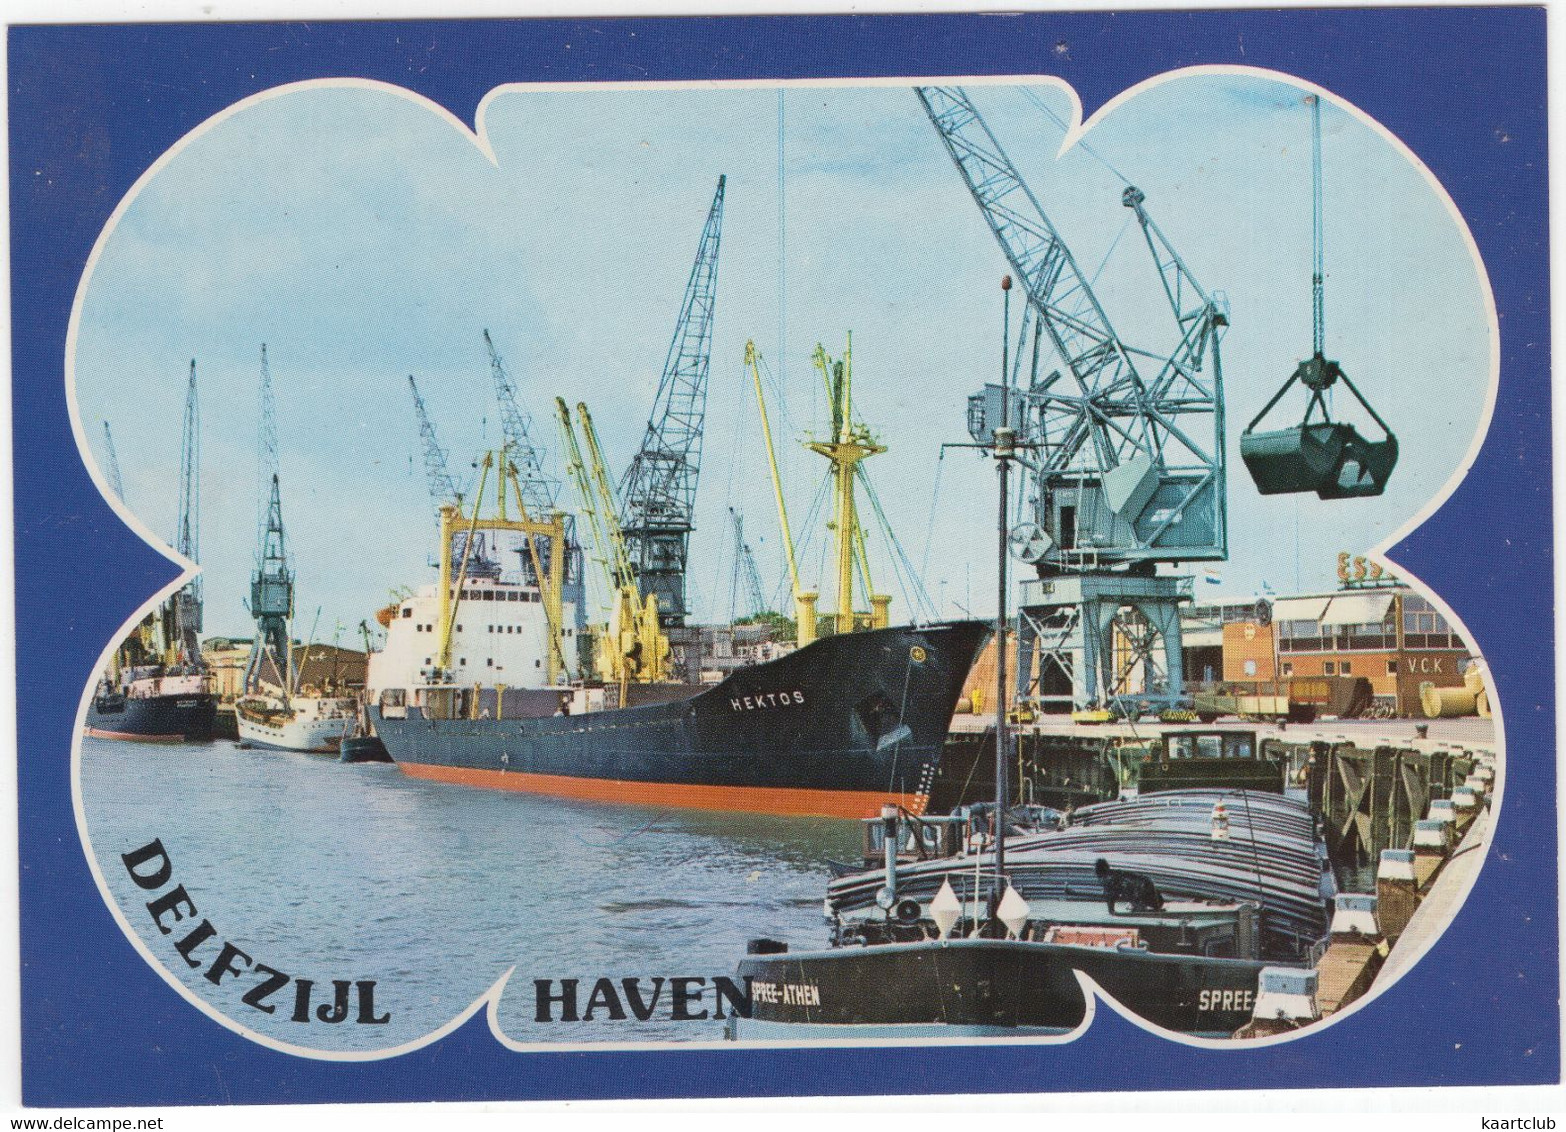 Delfzijl - Haven: MS 'Spree-Athen' & MS 'Hektos' - 'ESSO' Neon - (Groningen, Holland)  - Vrachtschip/Frachtschiff - Delfzijl